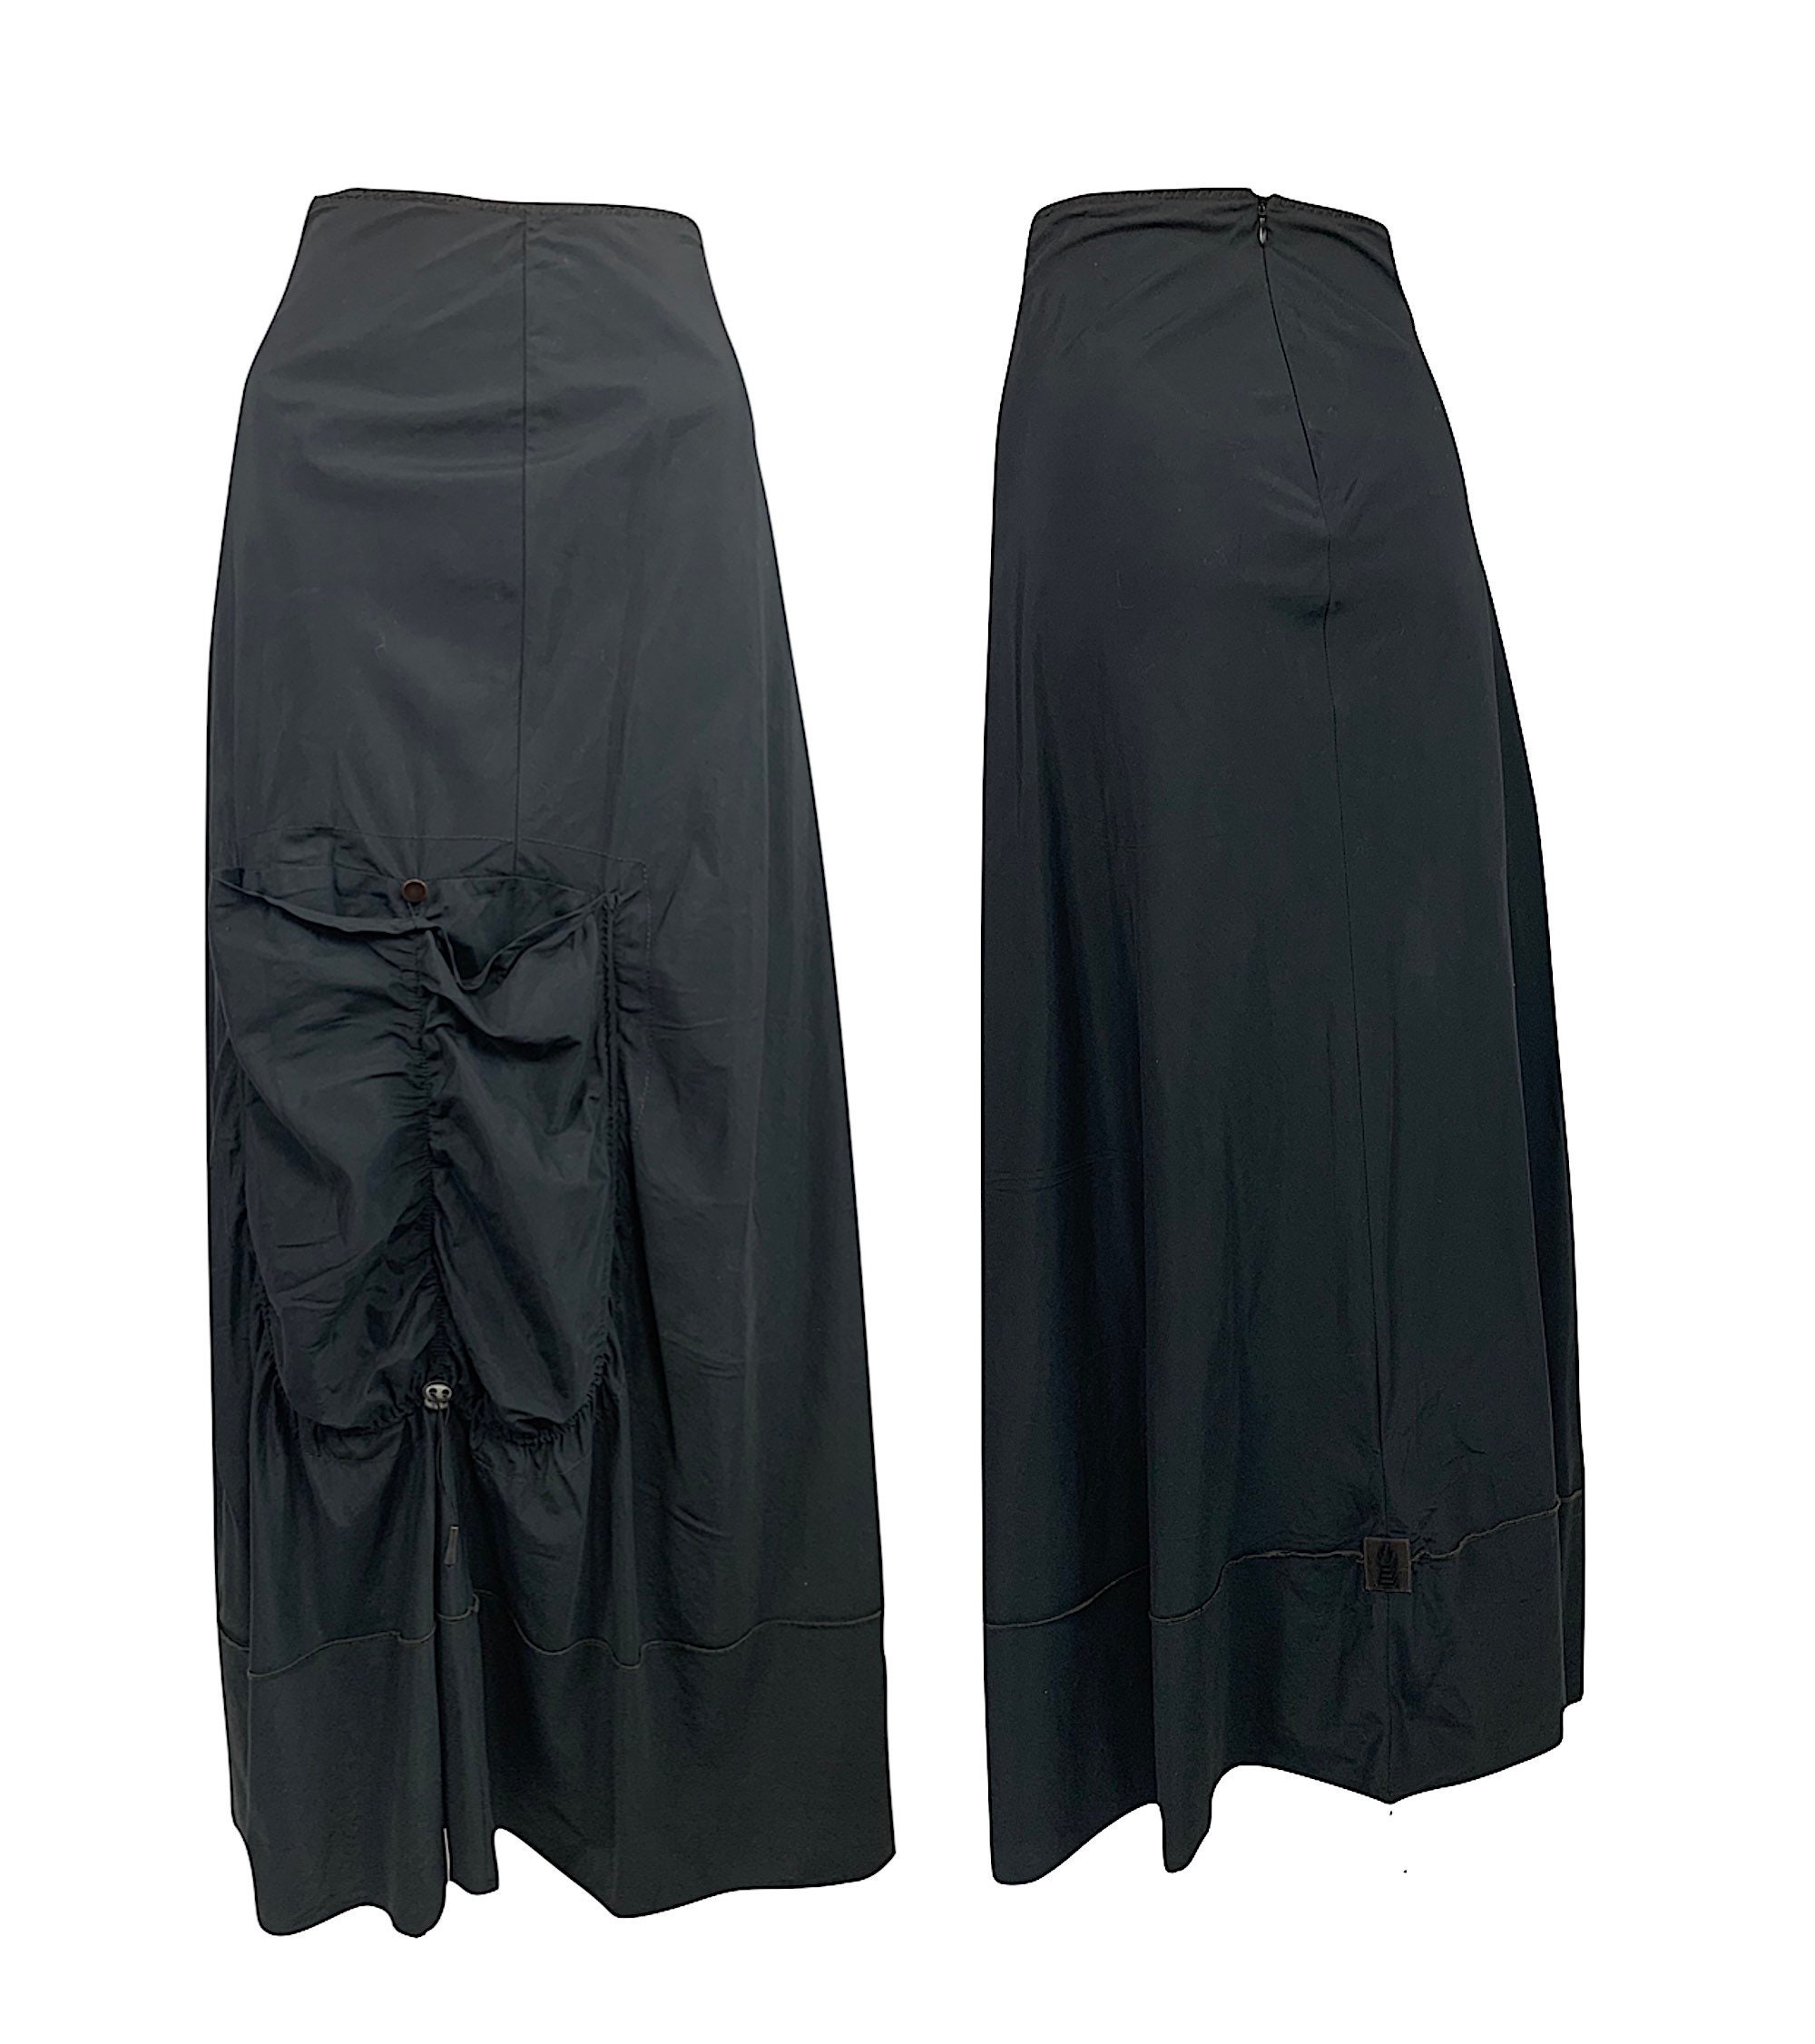 Cop copine RESEVED for J.D black parachute midi skirt, * Milford* model ...